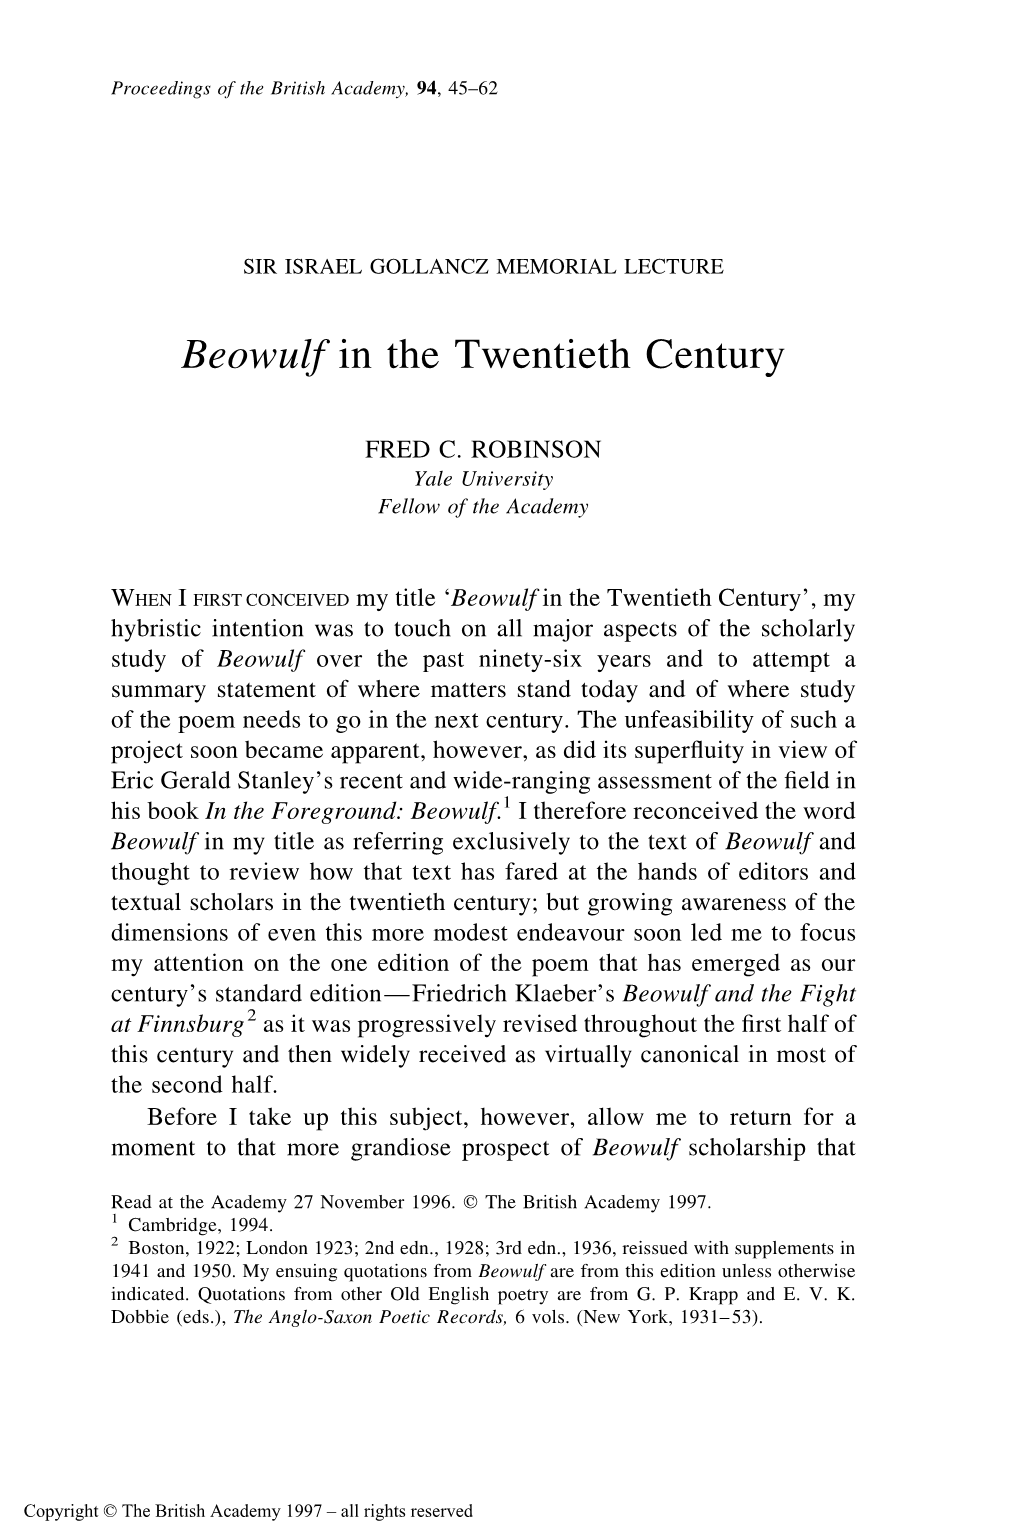 Beowulf in the Twentieth Century